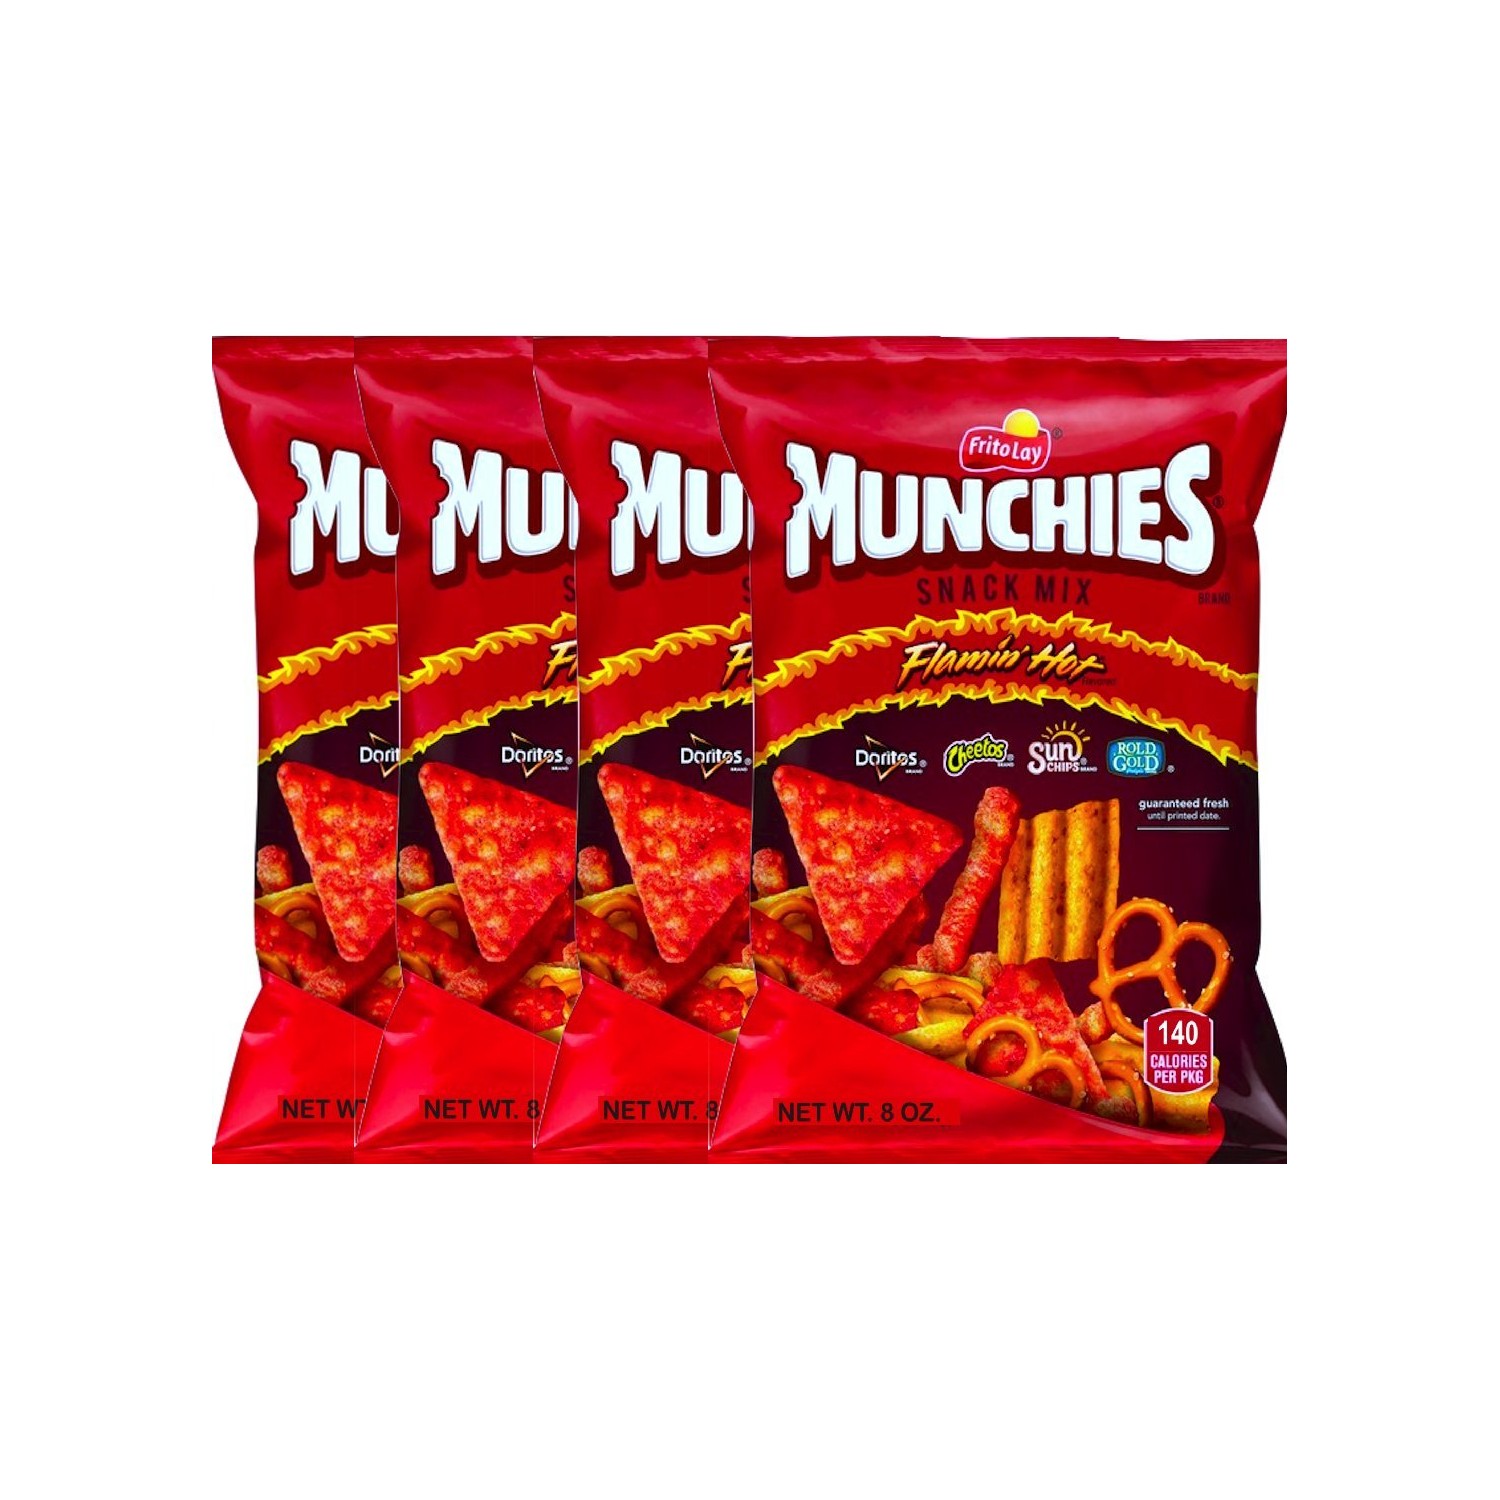 New Munchies Flaming Hot Snack Mix Doritos Cheetos Sun Chips Rold Gold Net Wt 8 Oz 4